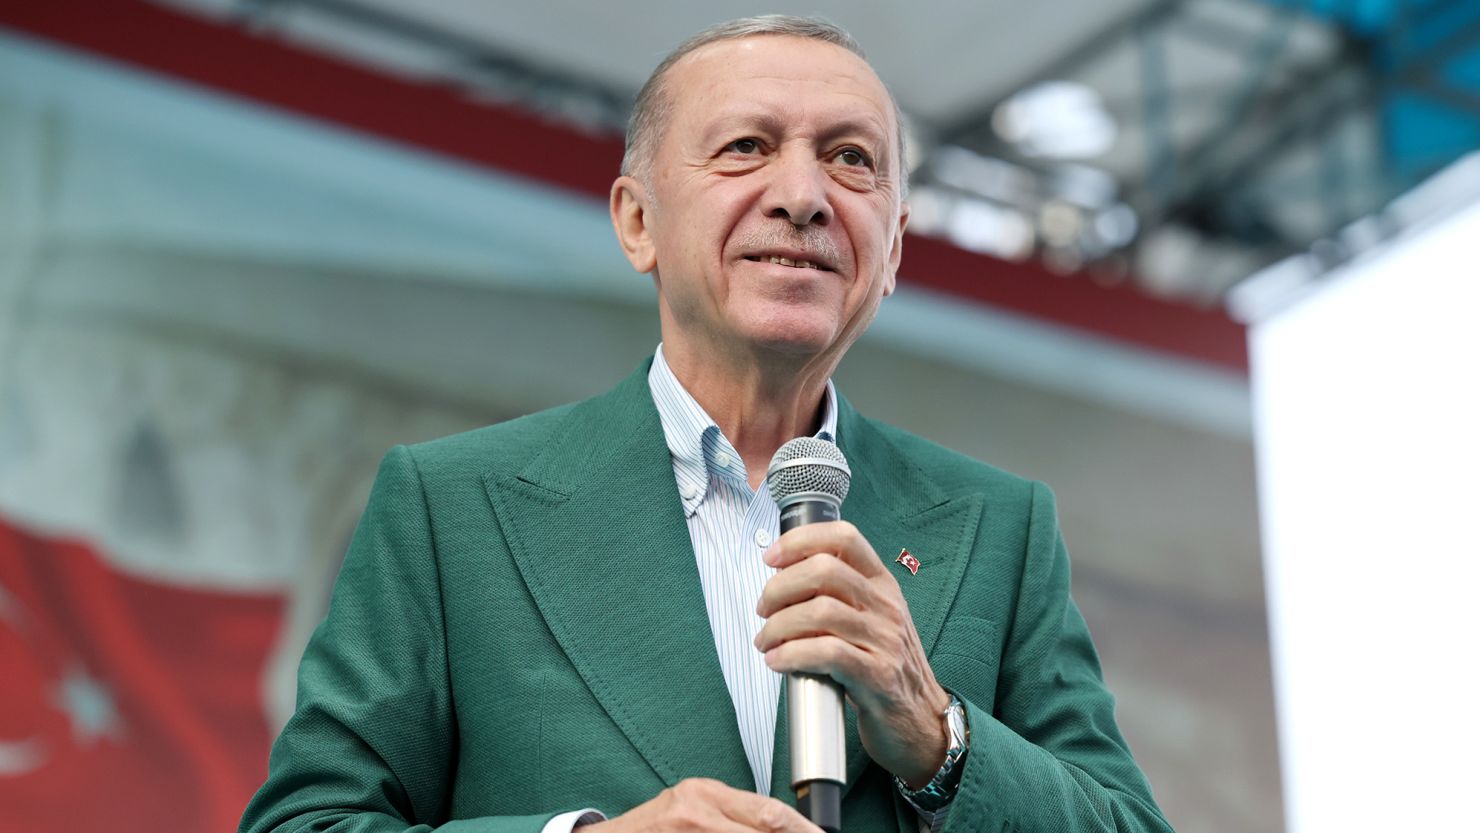 Turkish President Recep Tayyip Erdogan speaks during a public gathering at Republic Square in Sivas, Turkey on Tuesday.